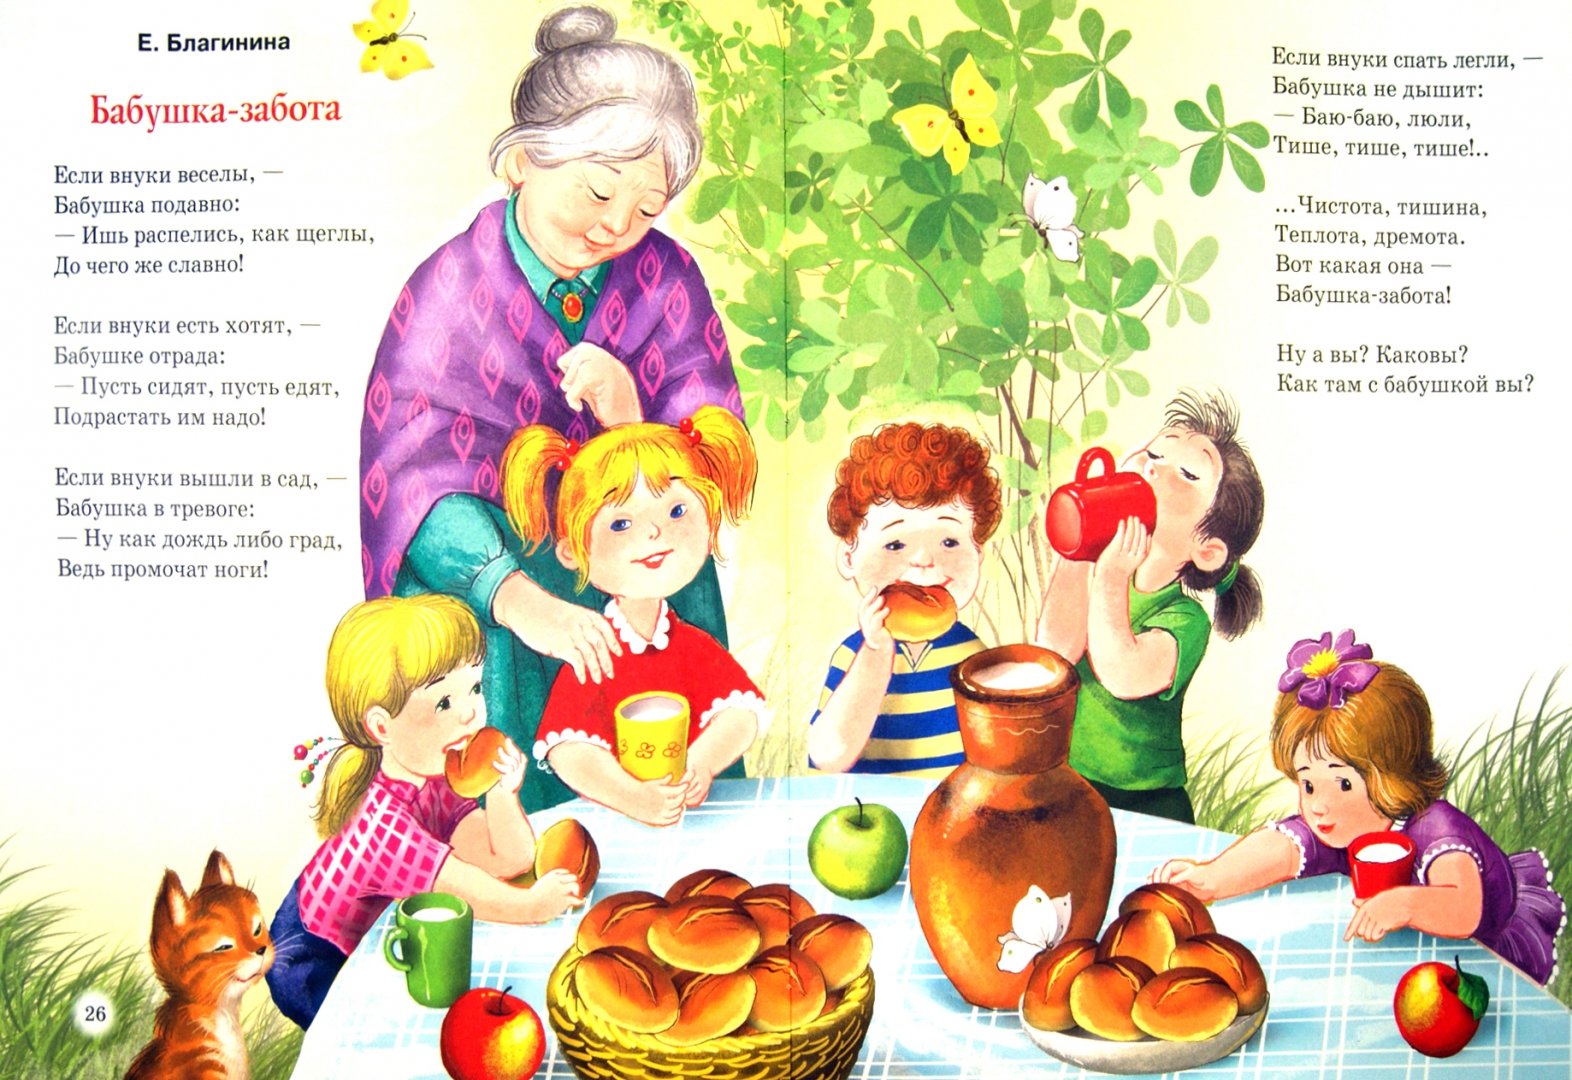 Произведения про бабушек. Стихи Благининой бабушка забота. Стих Благинина бабушка забота. Стихотворение про бабушку для детей.